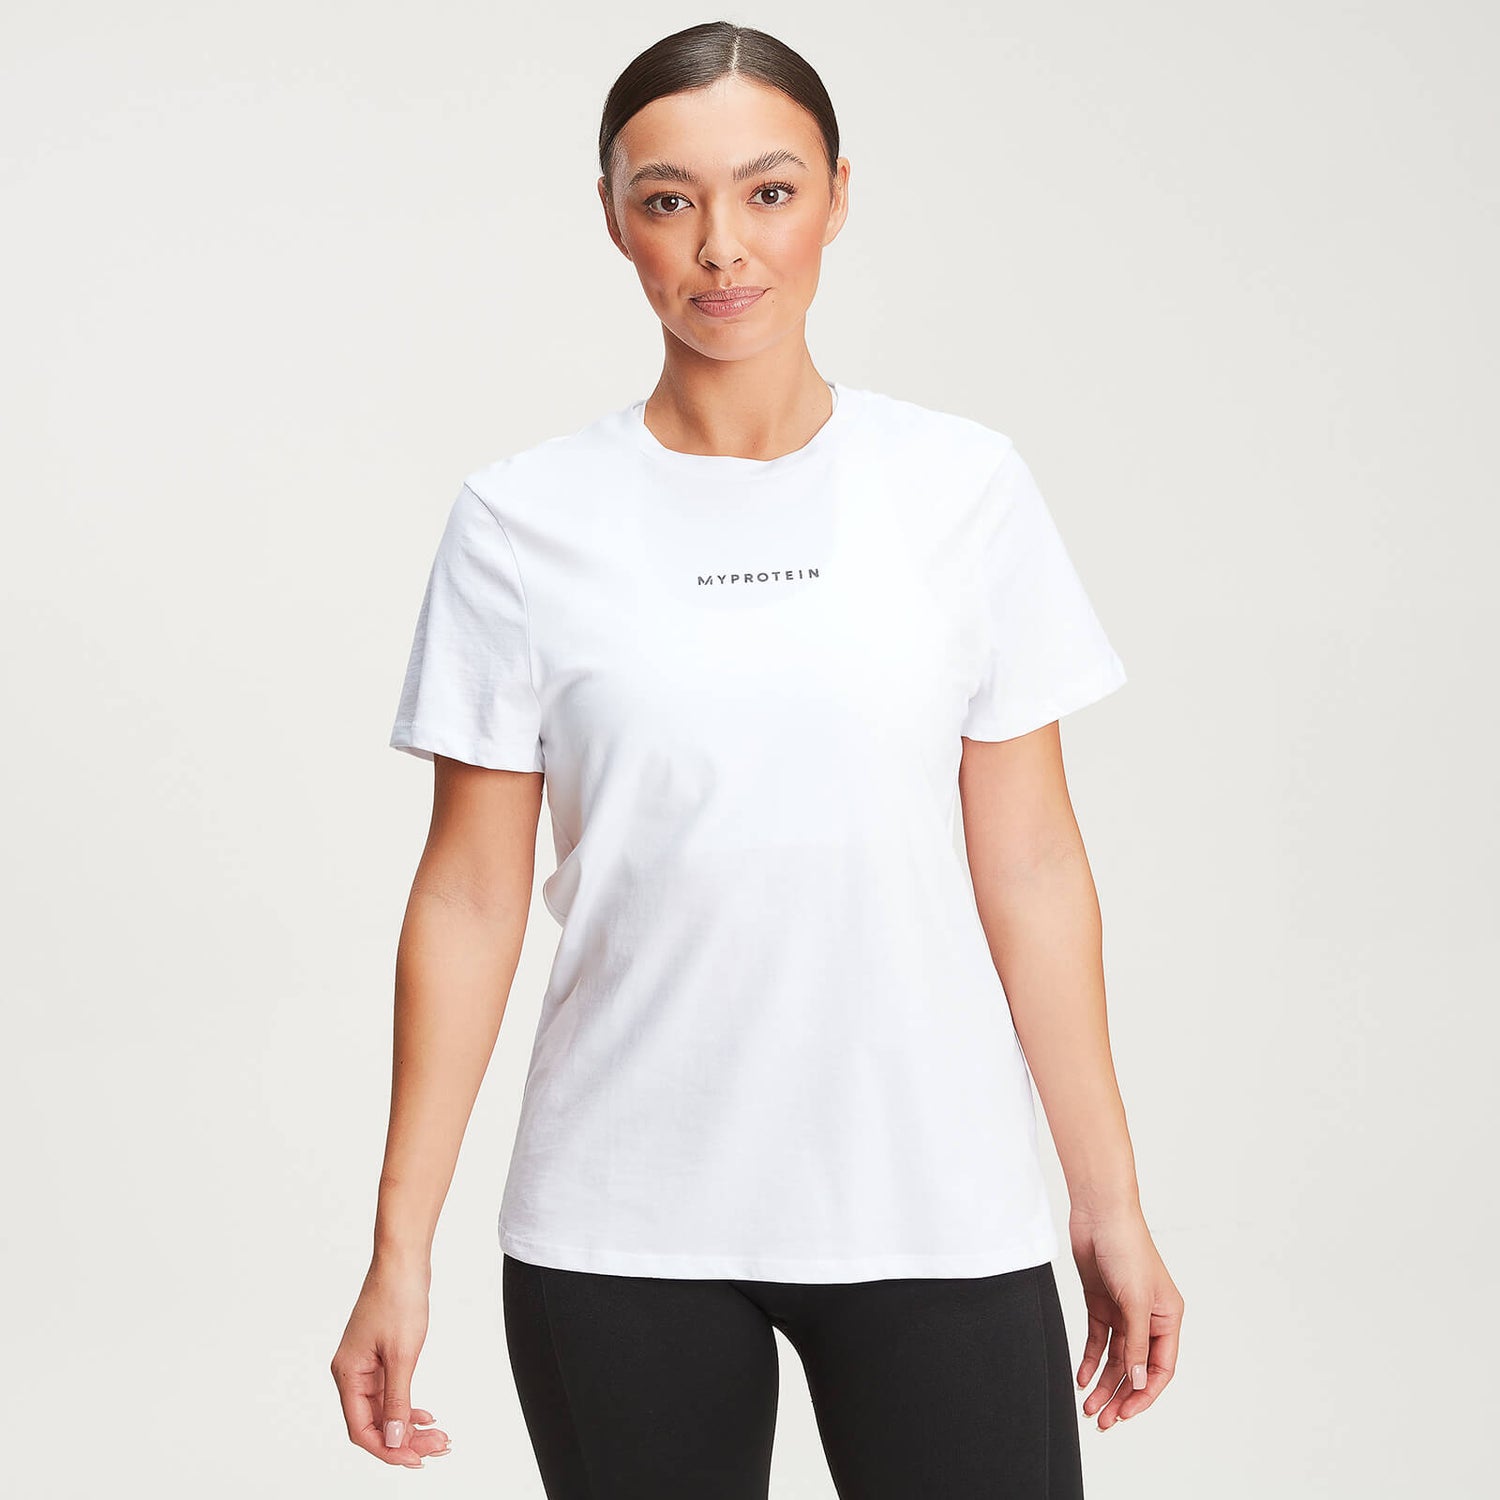 Camiseta New Originals Contemporánea de Mujer - Blanco - XS